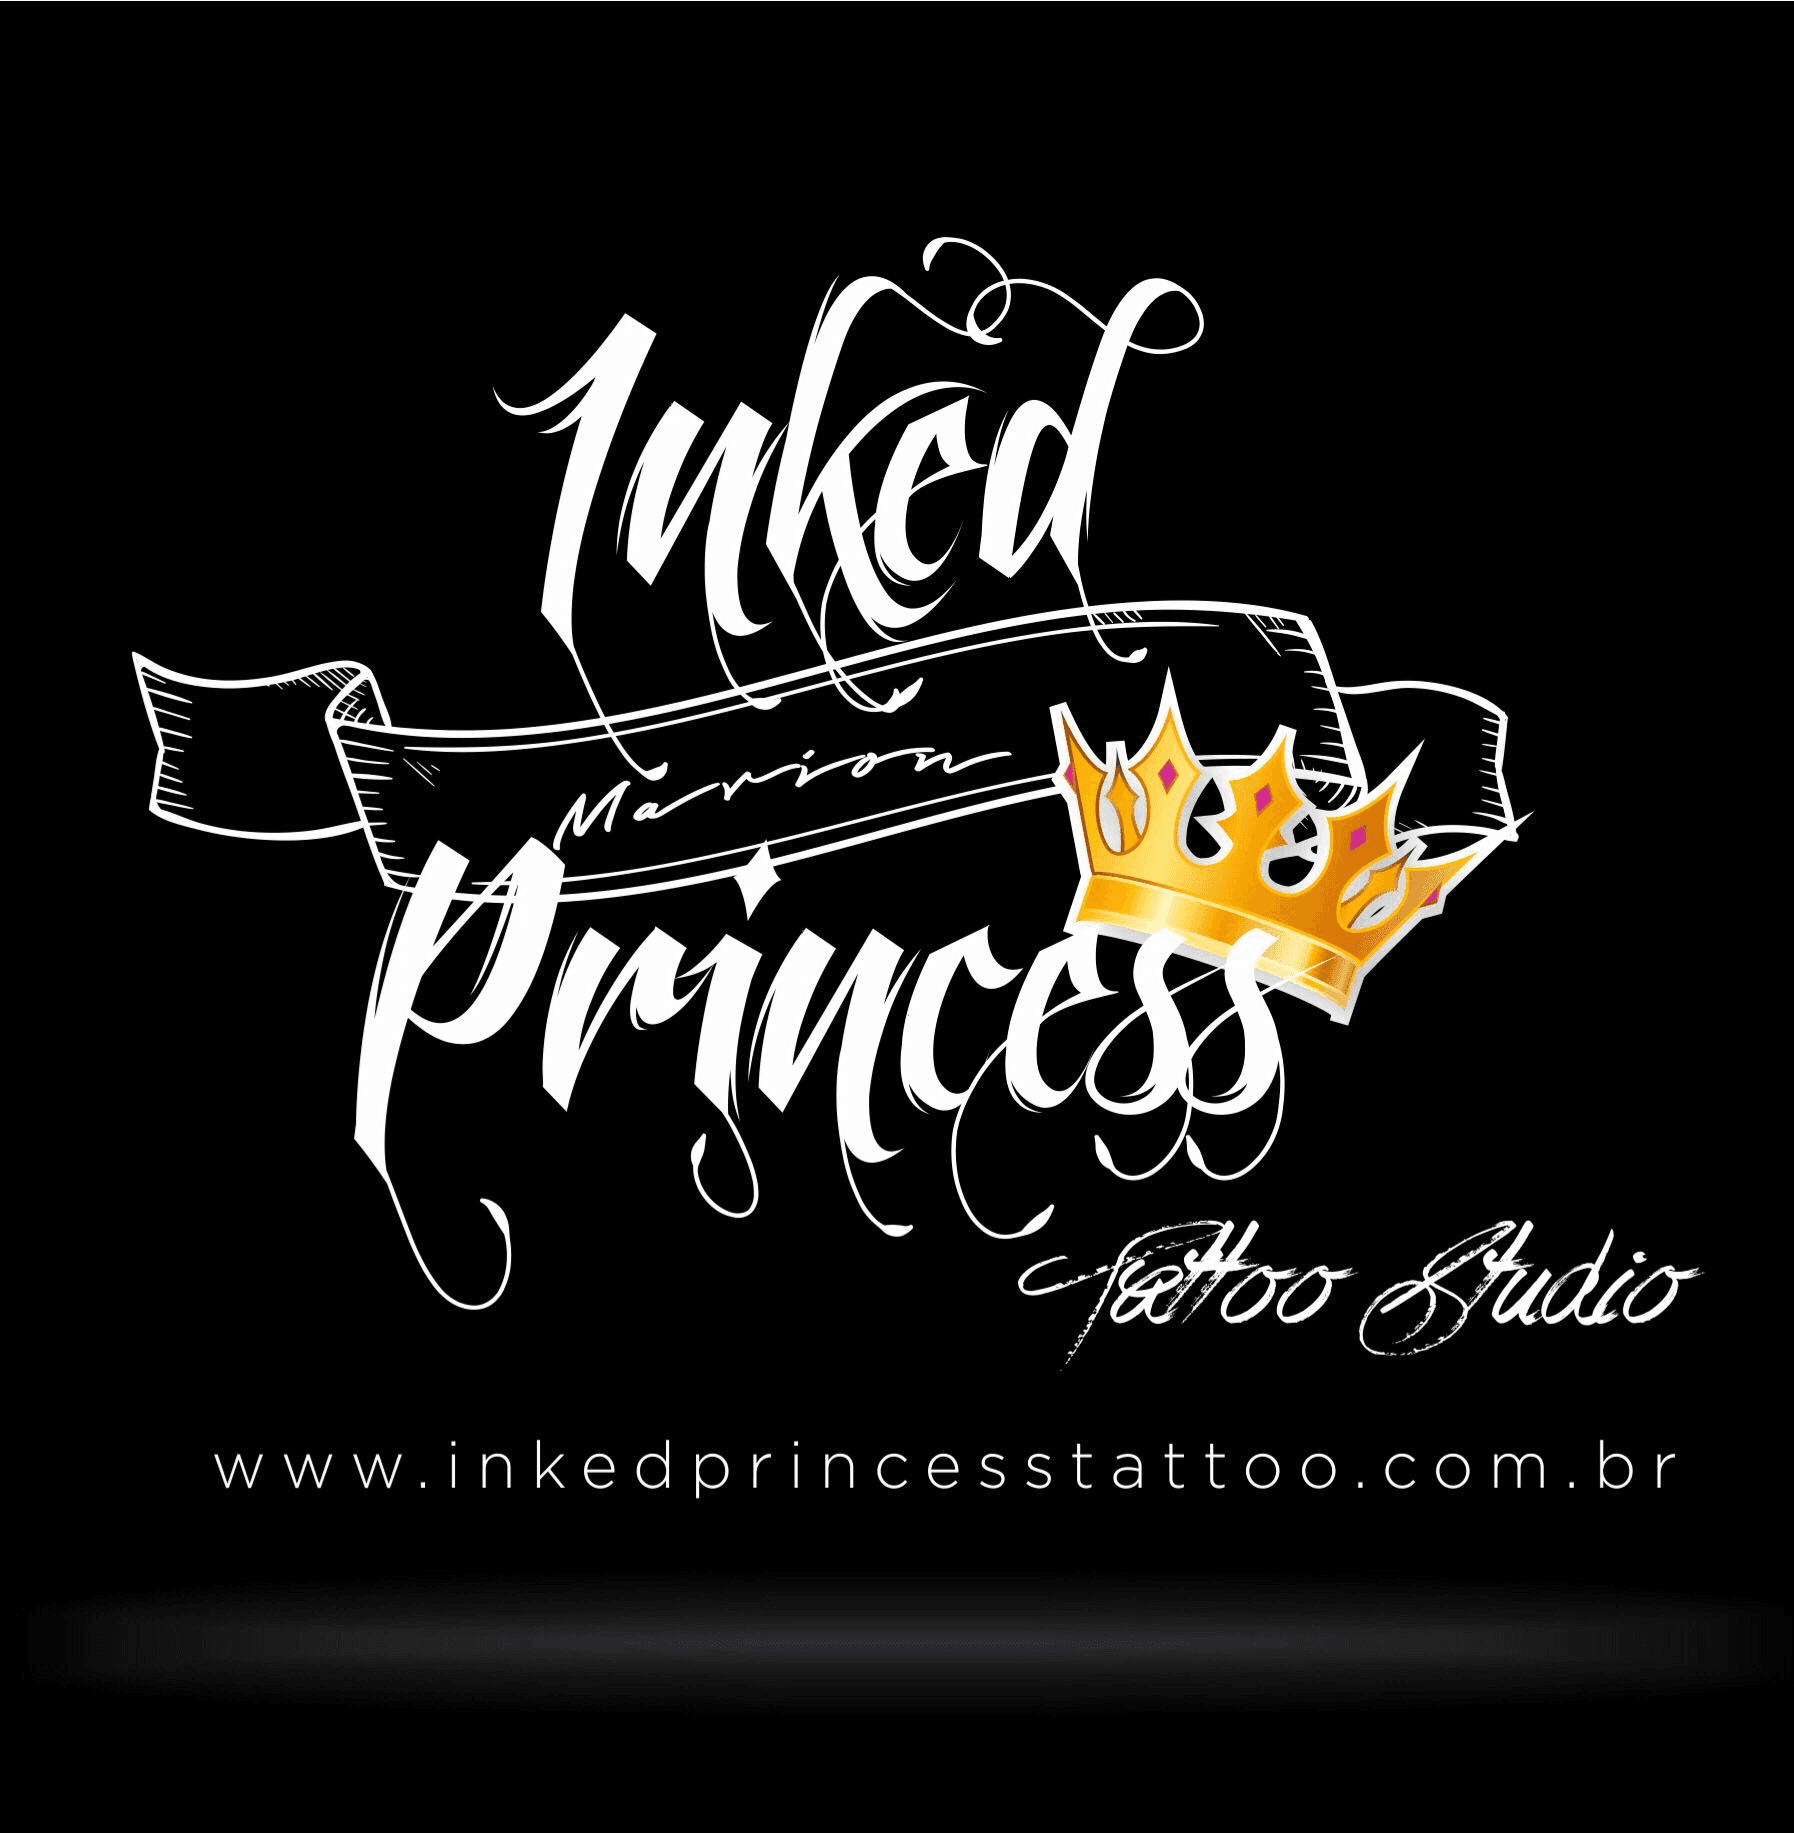 Share more than 78 the word princess tattoos  thtantai2